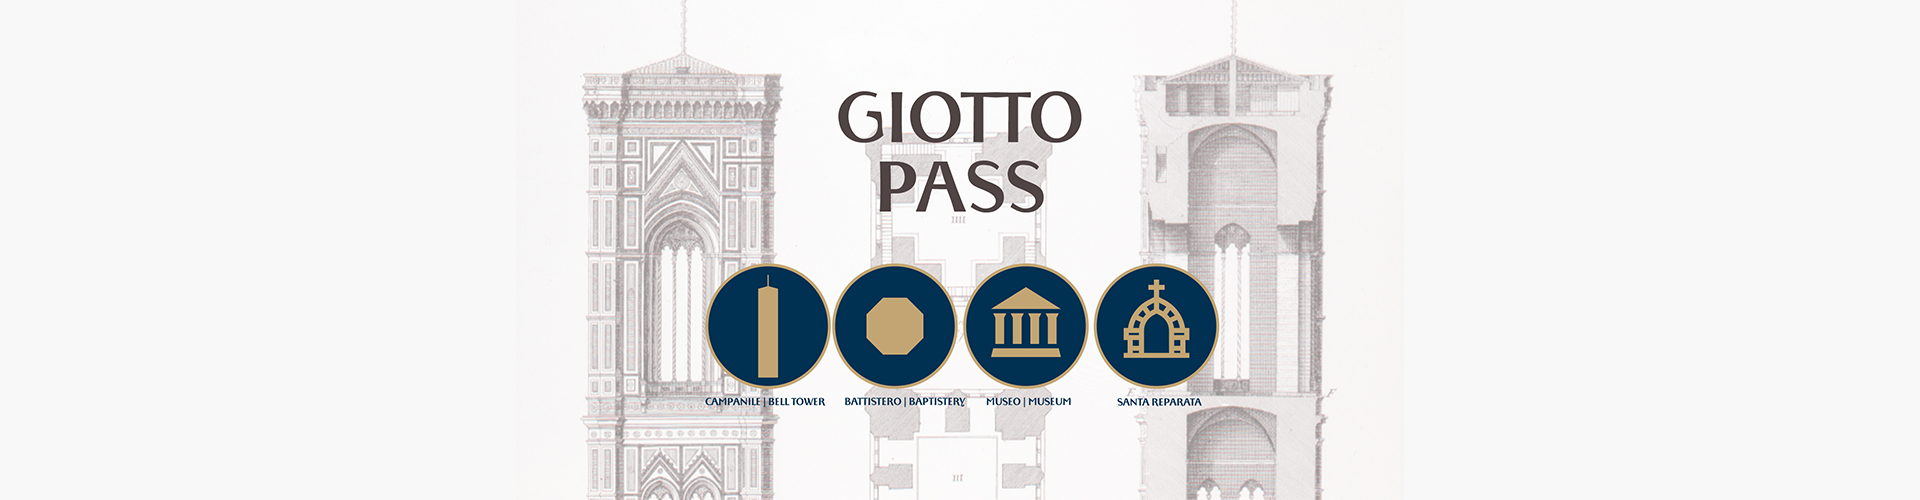 Giotto Pass